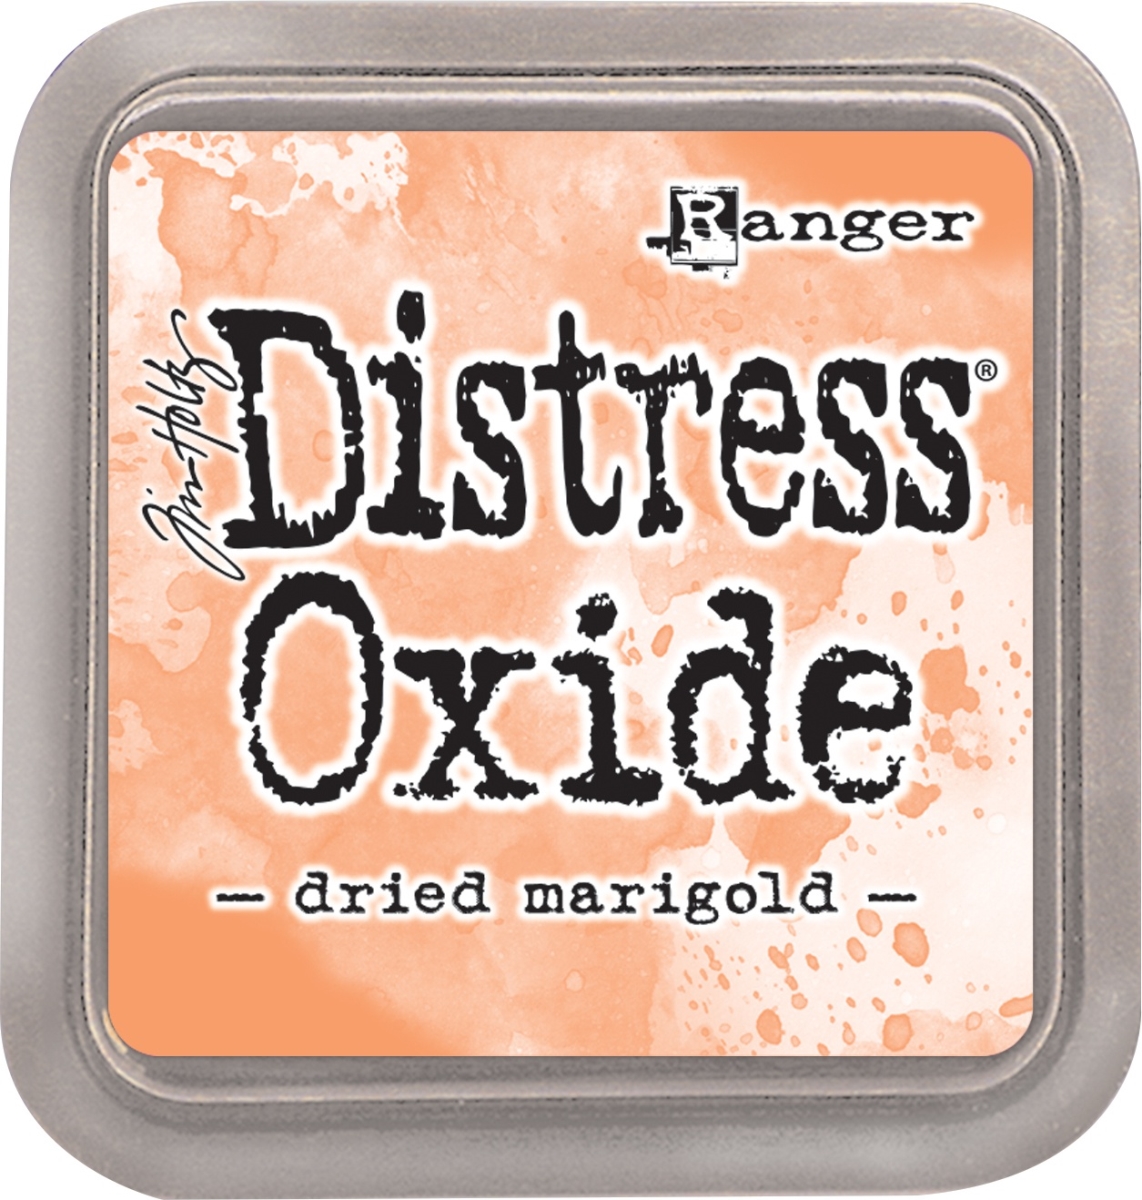 Tdo-55914 Tim Holtz Distress Oxides Ink Pad, Dried Marigold